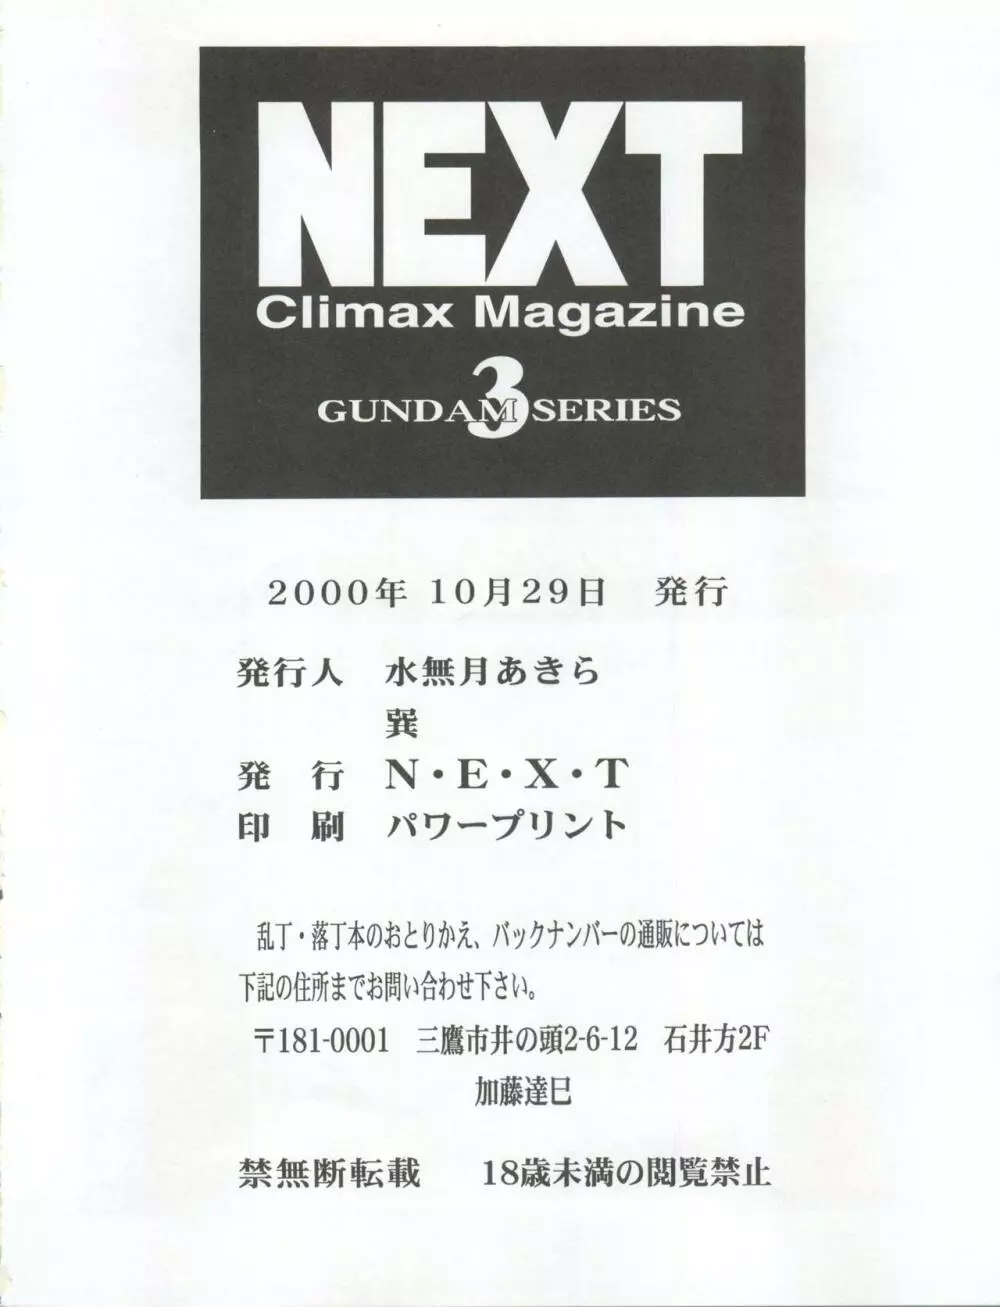 NEXT Climax Magazine 3 Gundam Series 102ページ